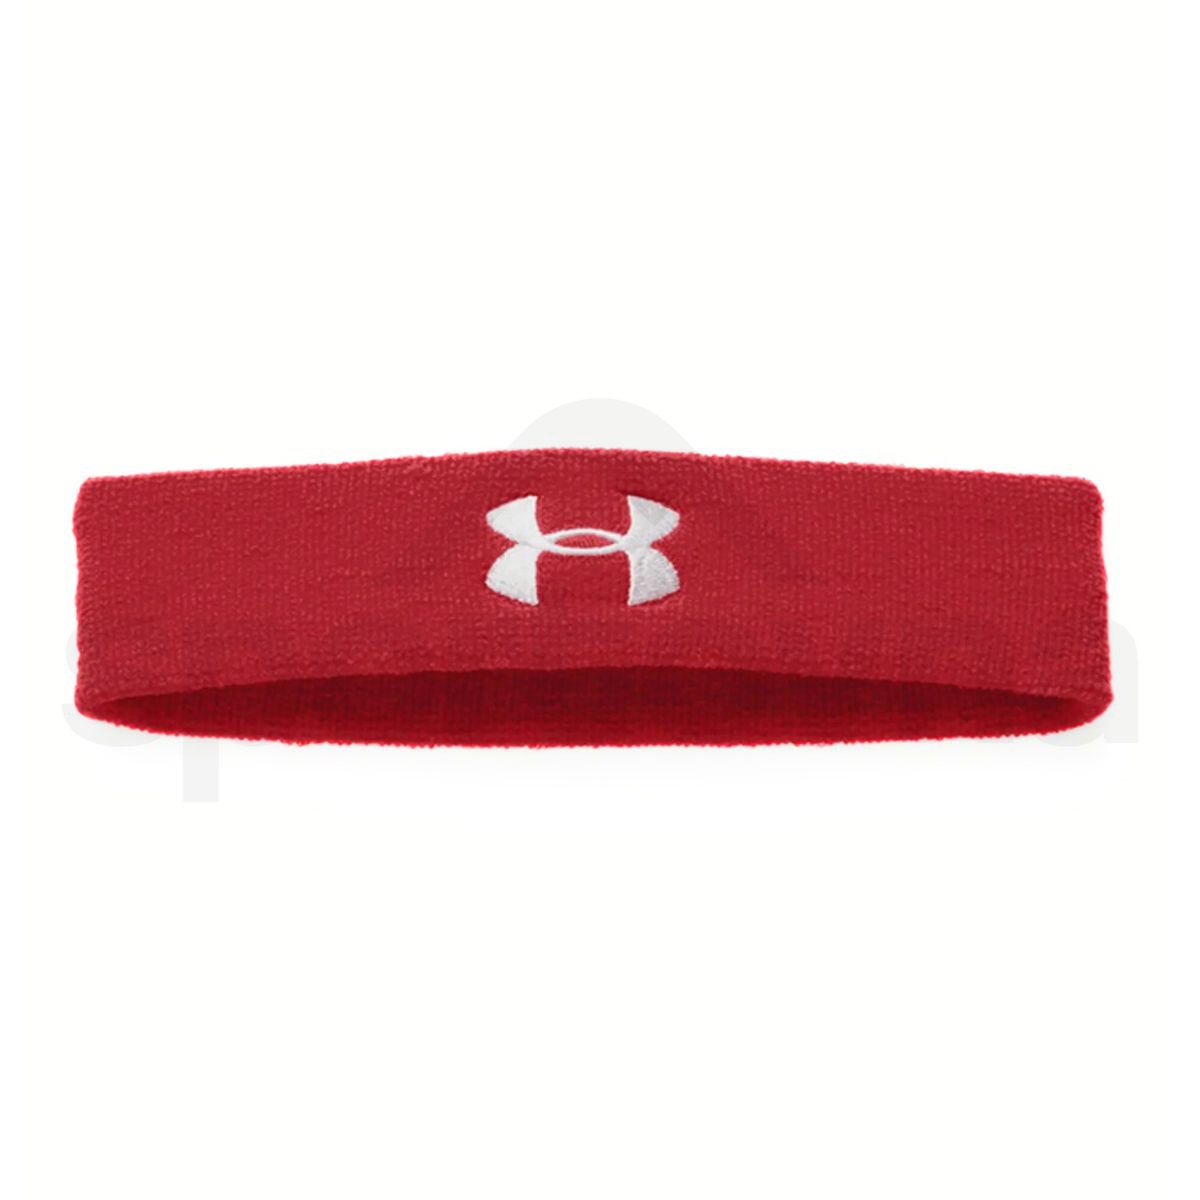 Čelenka Under Armour Performance Headband M - červená